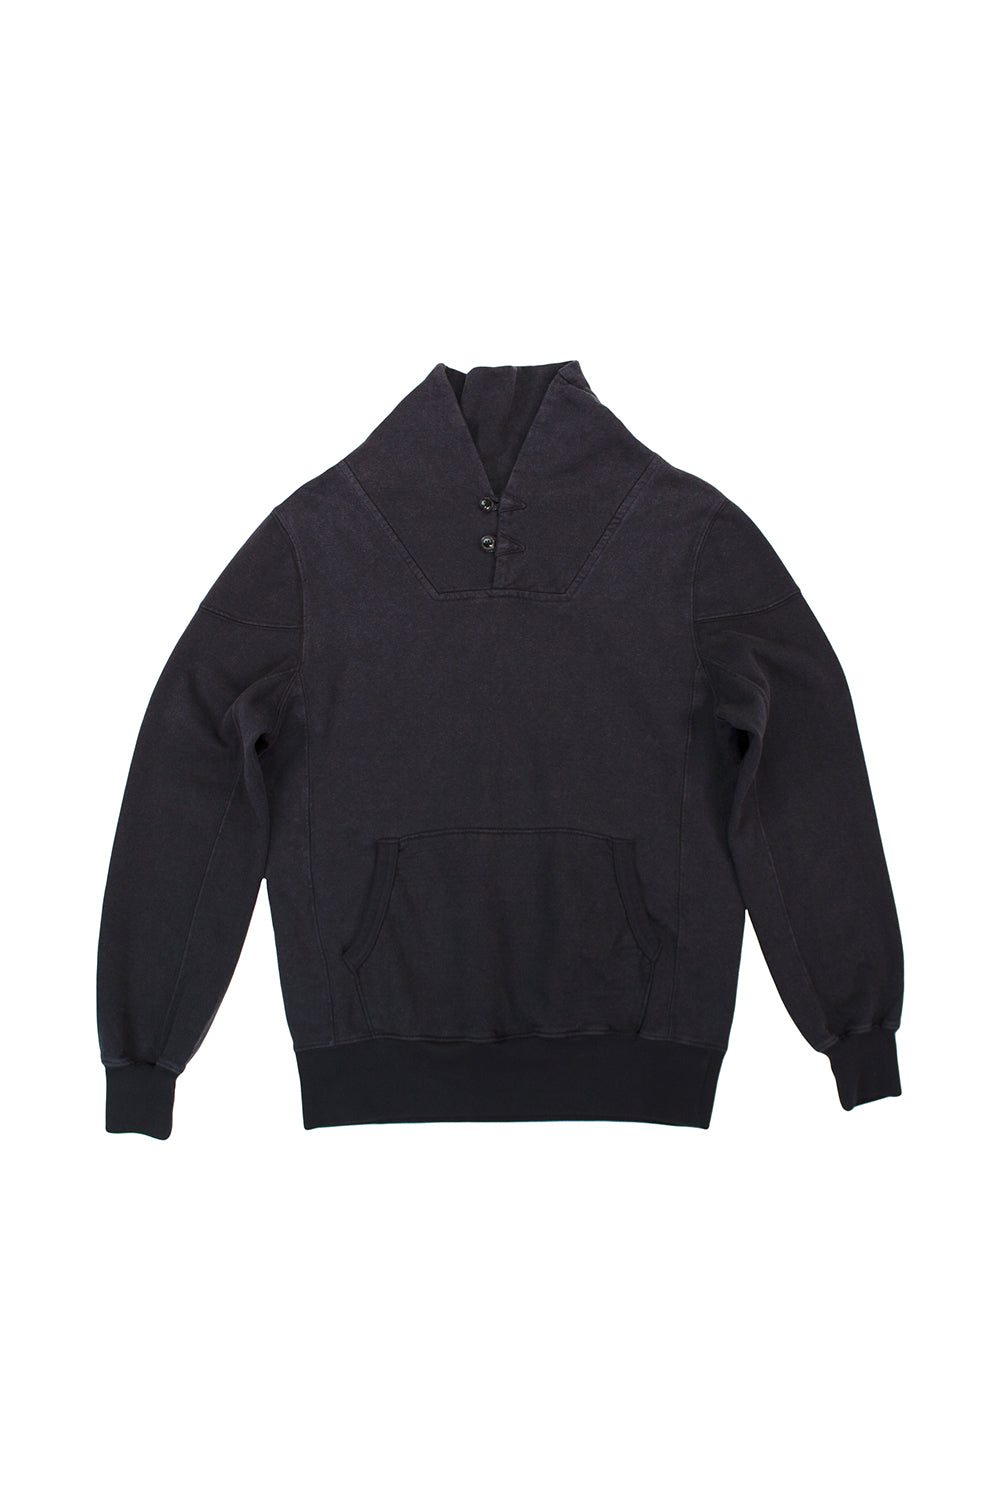 Whittier Sweatshirt | Jungmaven Hemp Clothing & Accessories / Color: Black